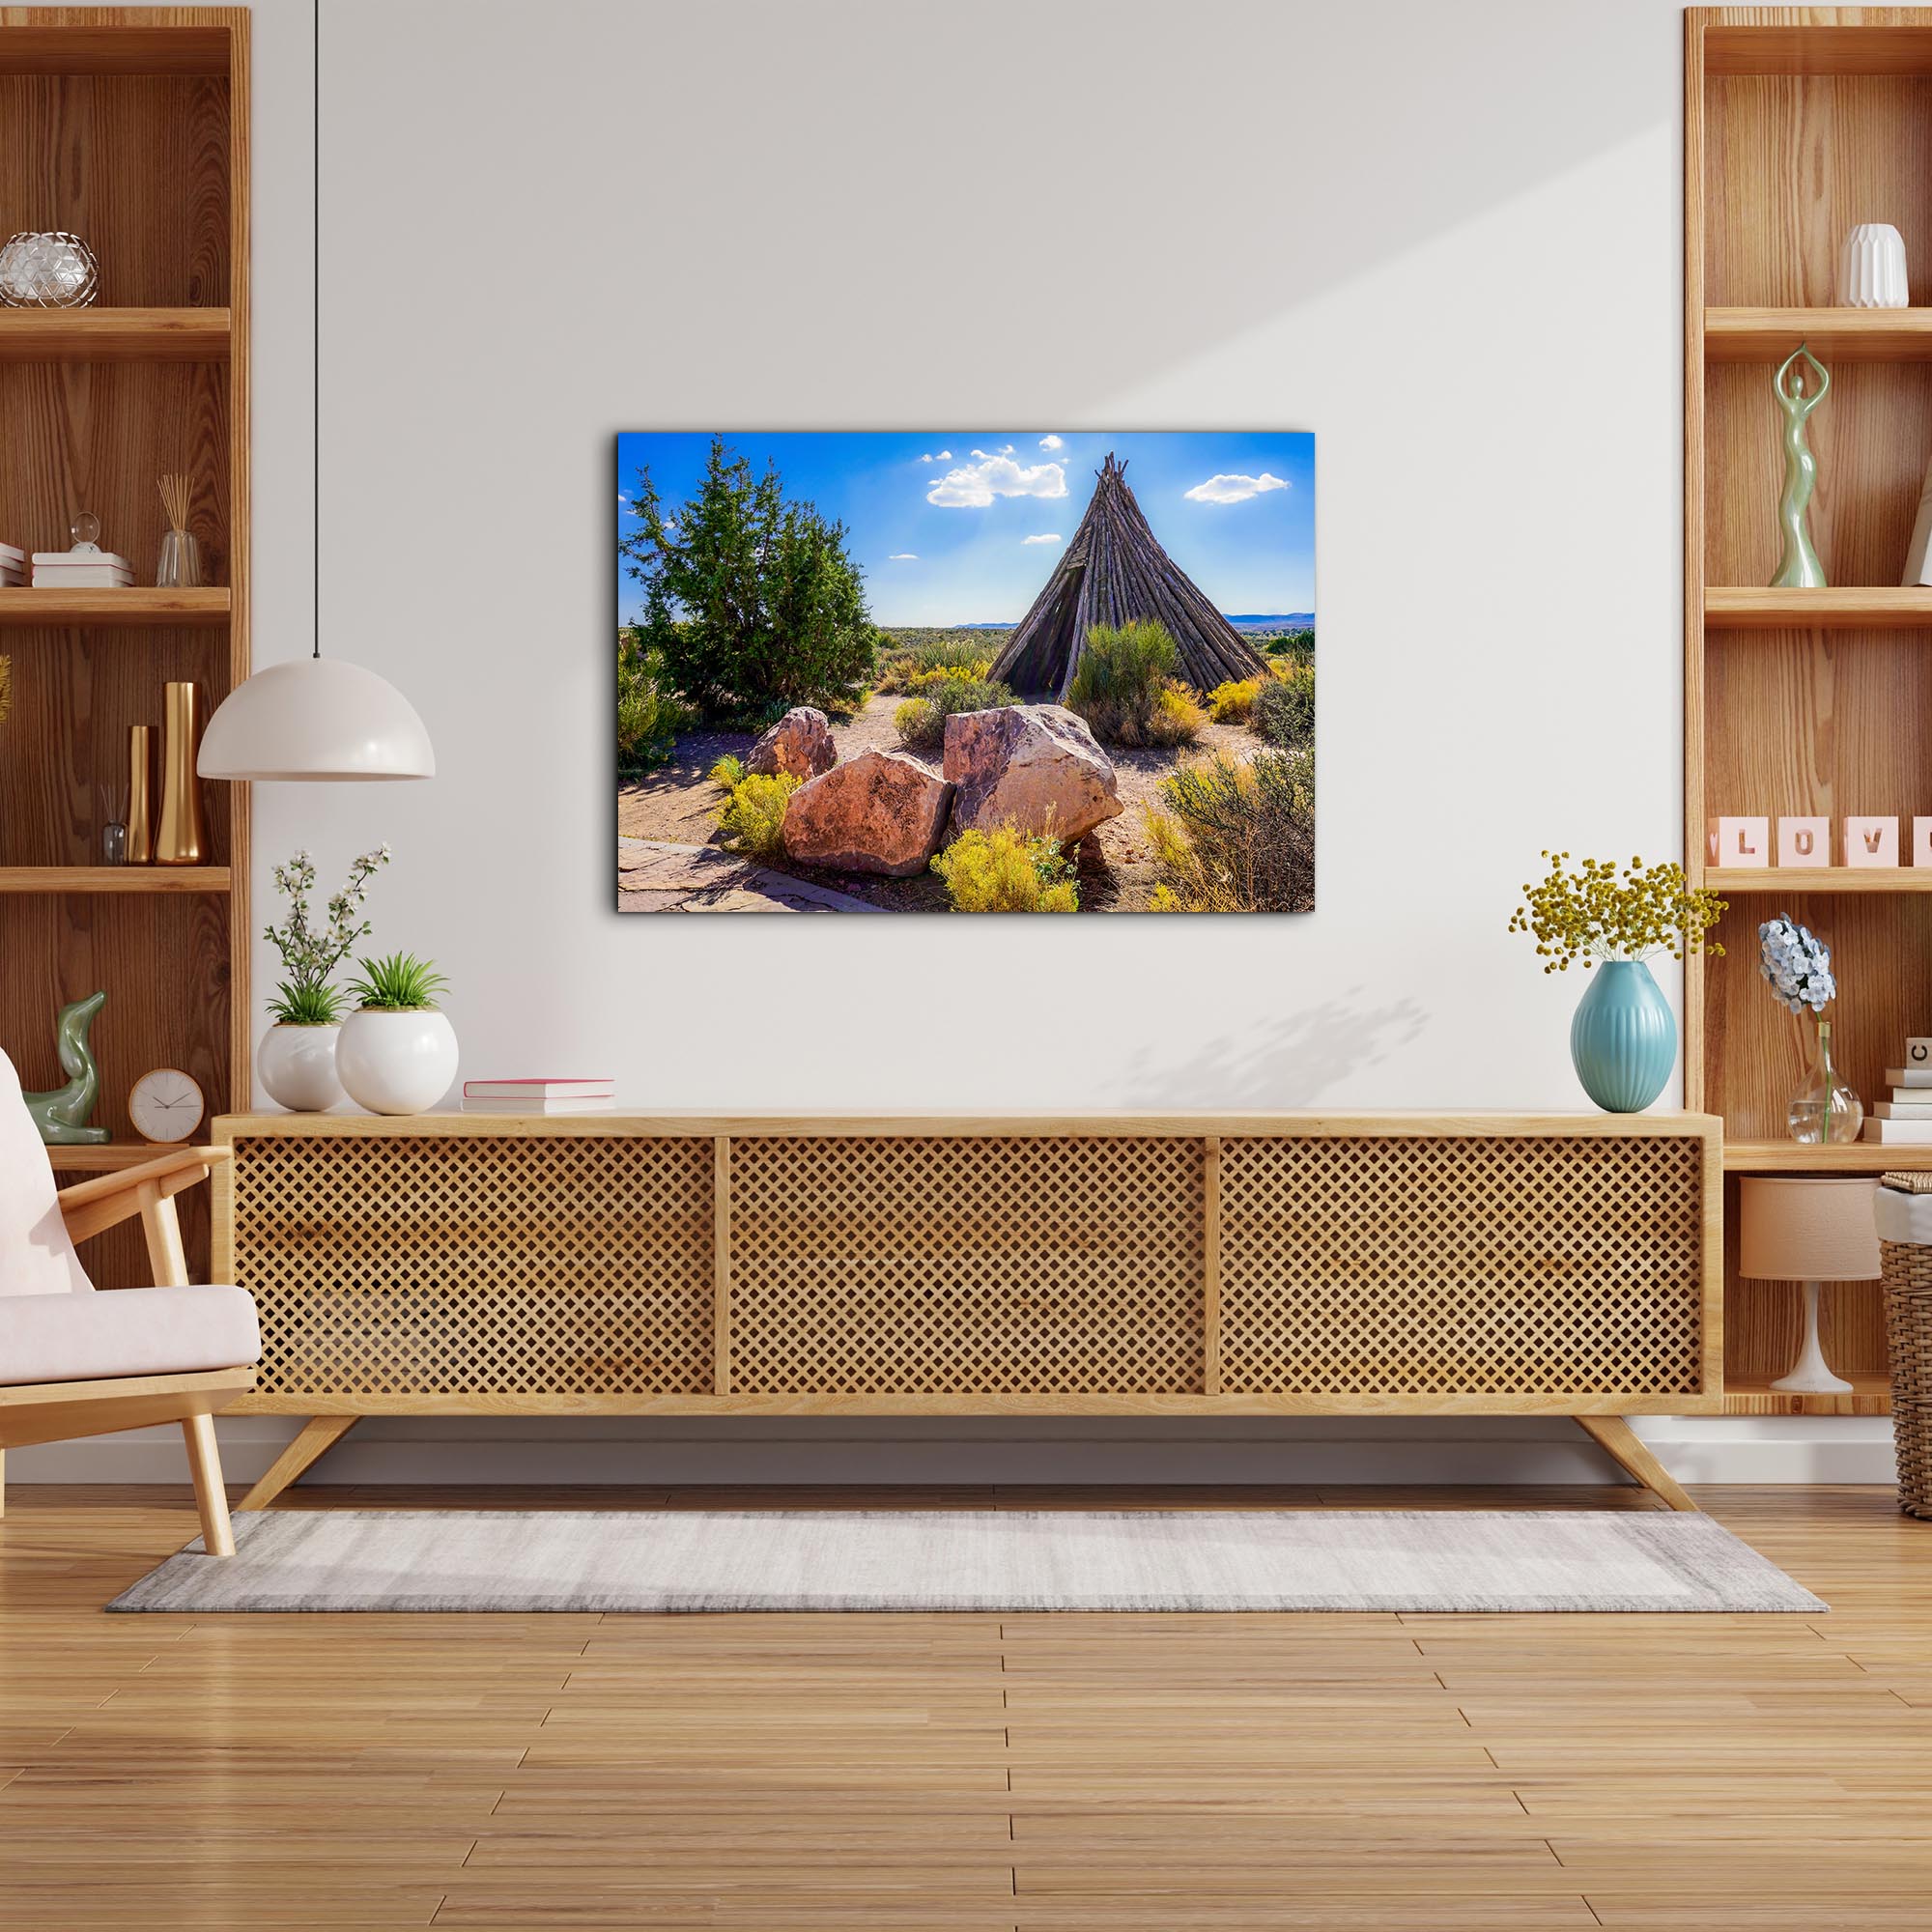 Desert Teepee by Adam Utz - Desert Art, Southwestern Decor (32in x 22in) - Lifestyle View